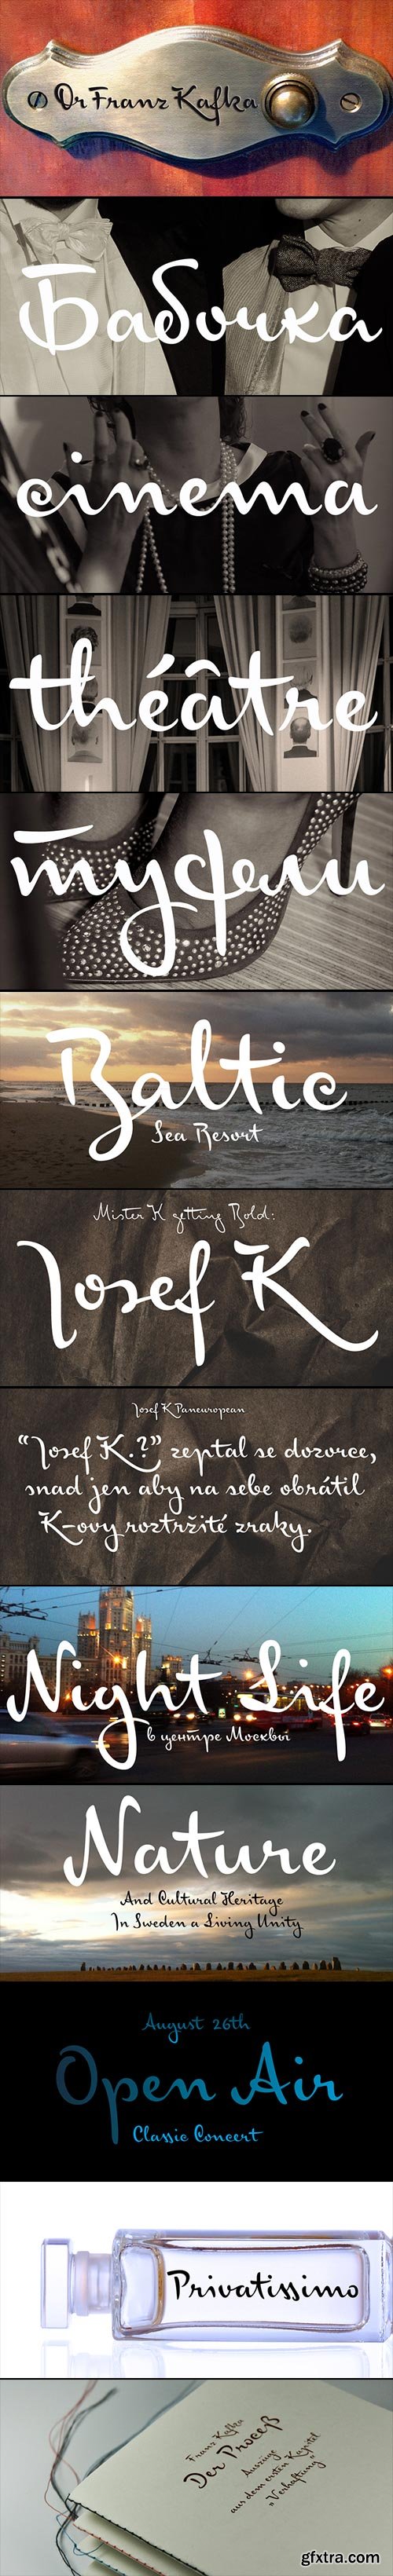 Josef K Paneuropean - Franz Kafka’s Writing Style OTF $40